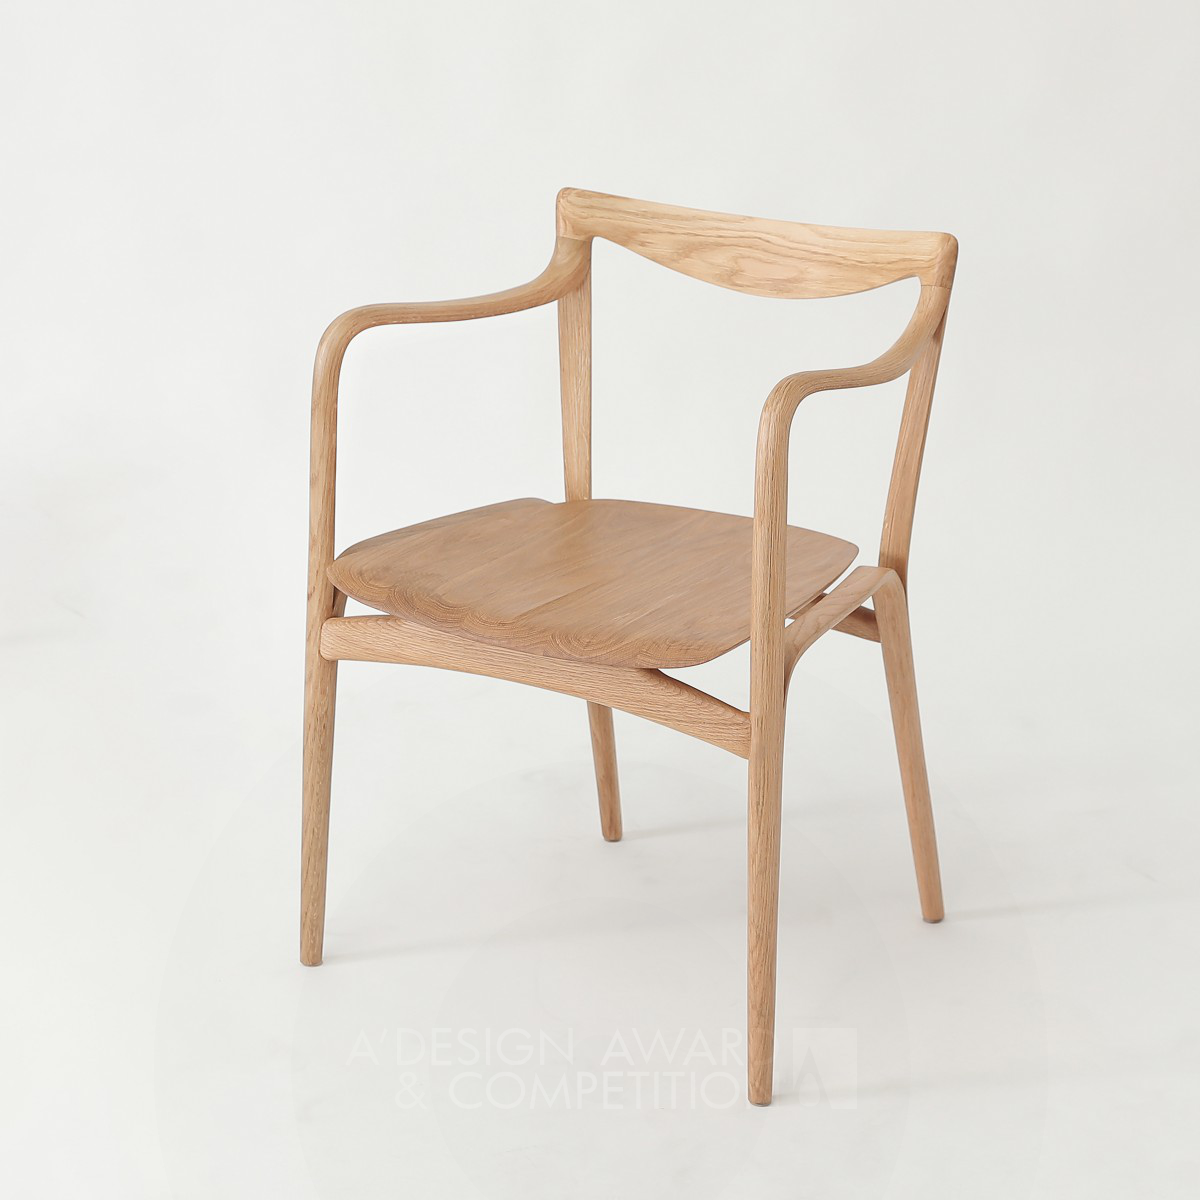 Smile Chair by Xu Le Bronze Furniture Design Award Winner 2021 